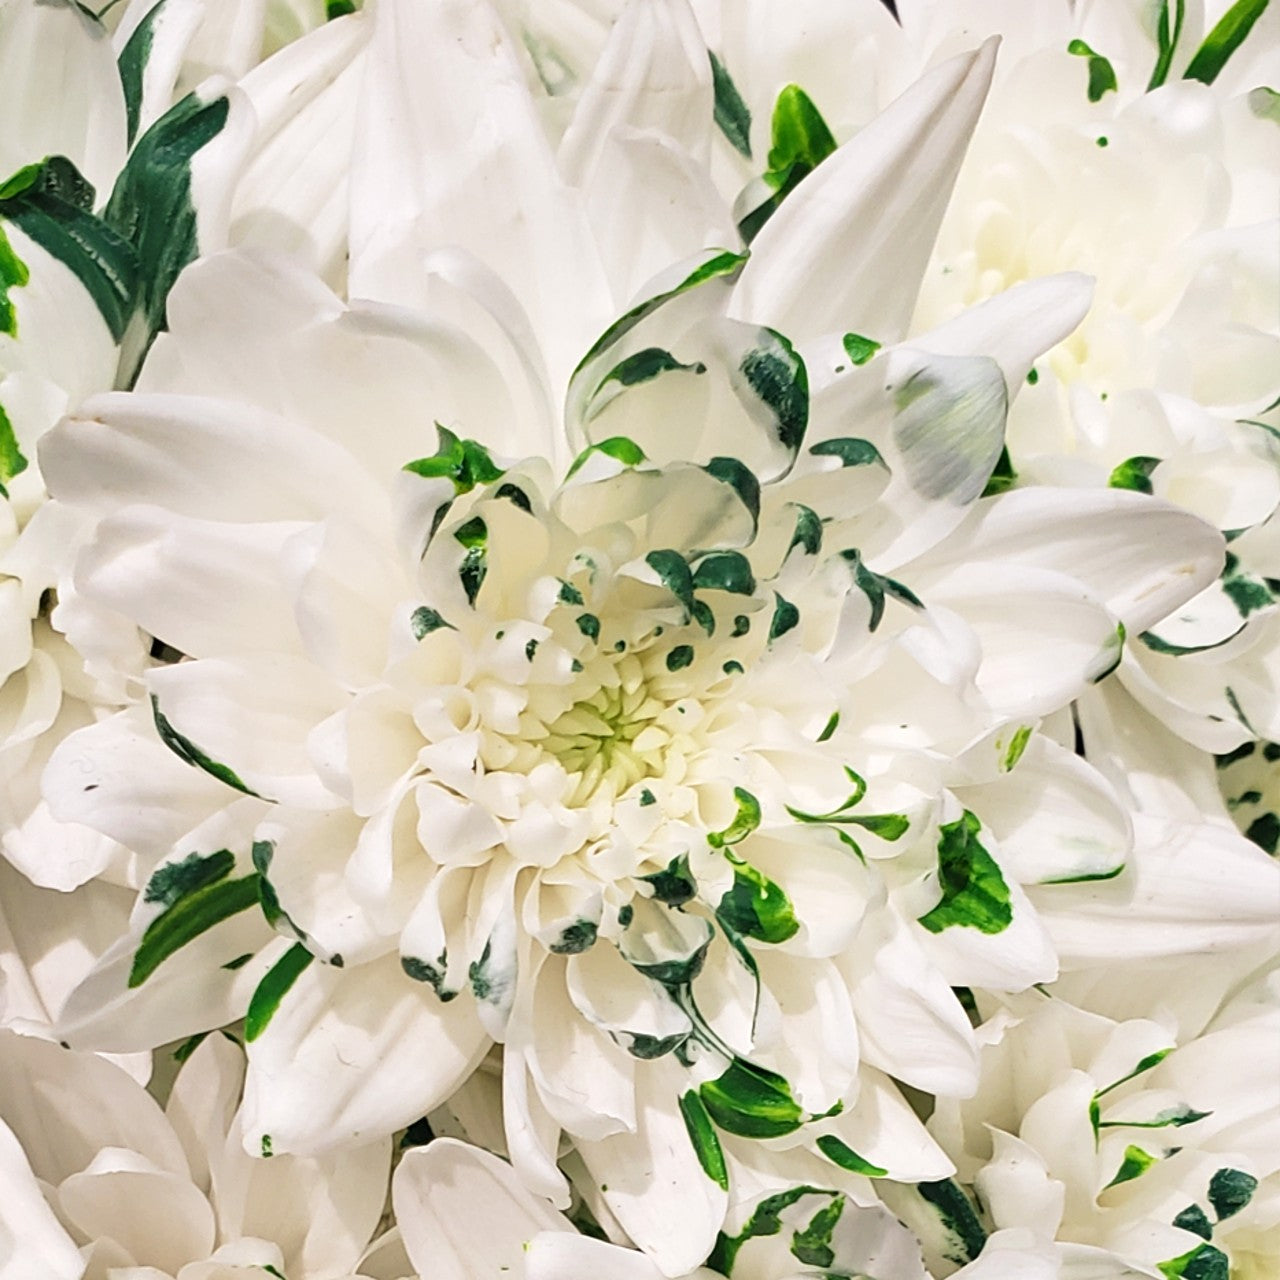 Buy Fresh White Chrysanthemum Flowers Bulk/Wholesale